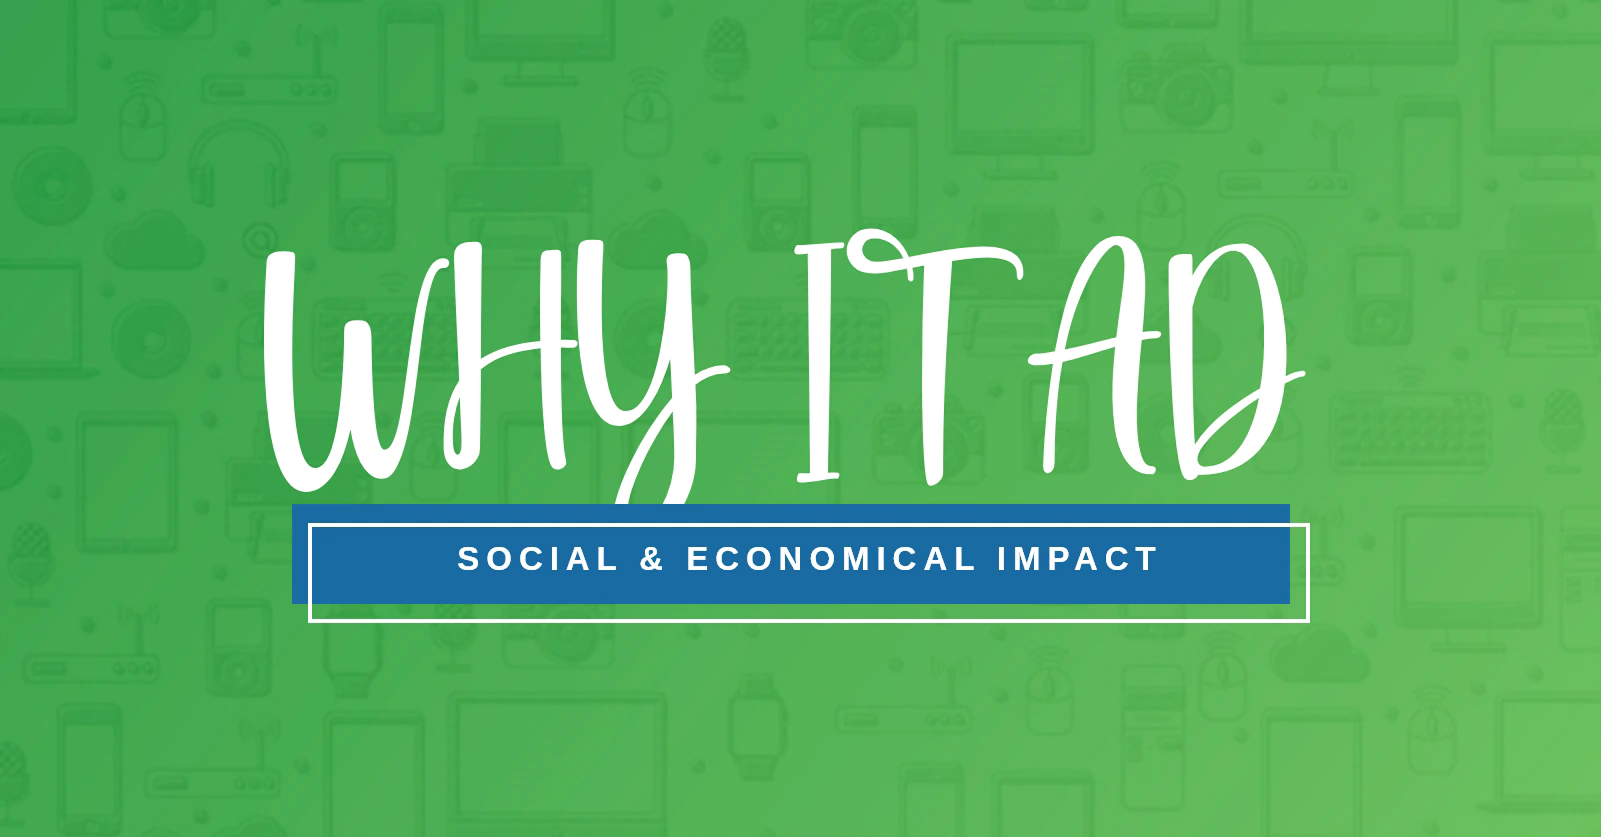 The social & economic impact of ITAD